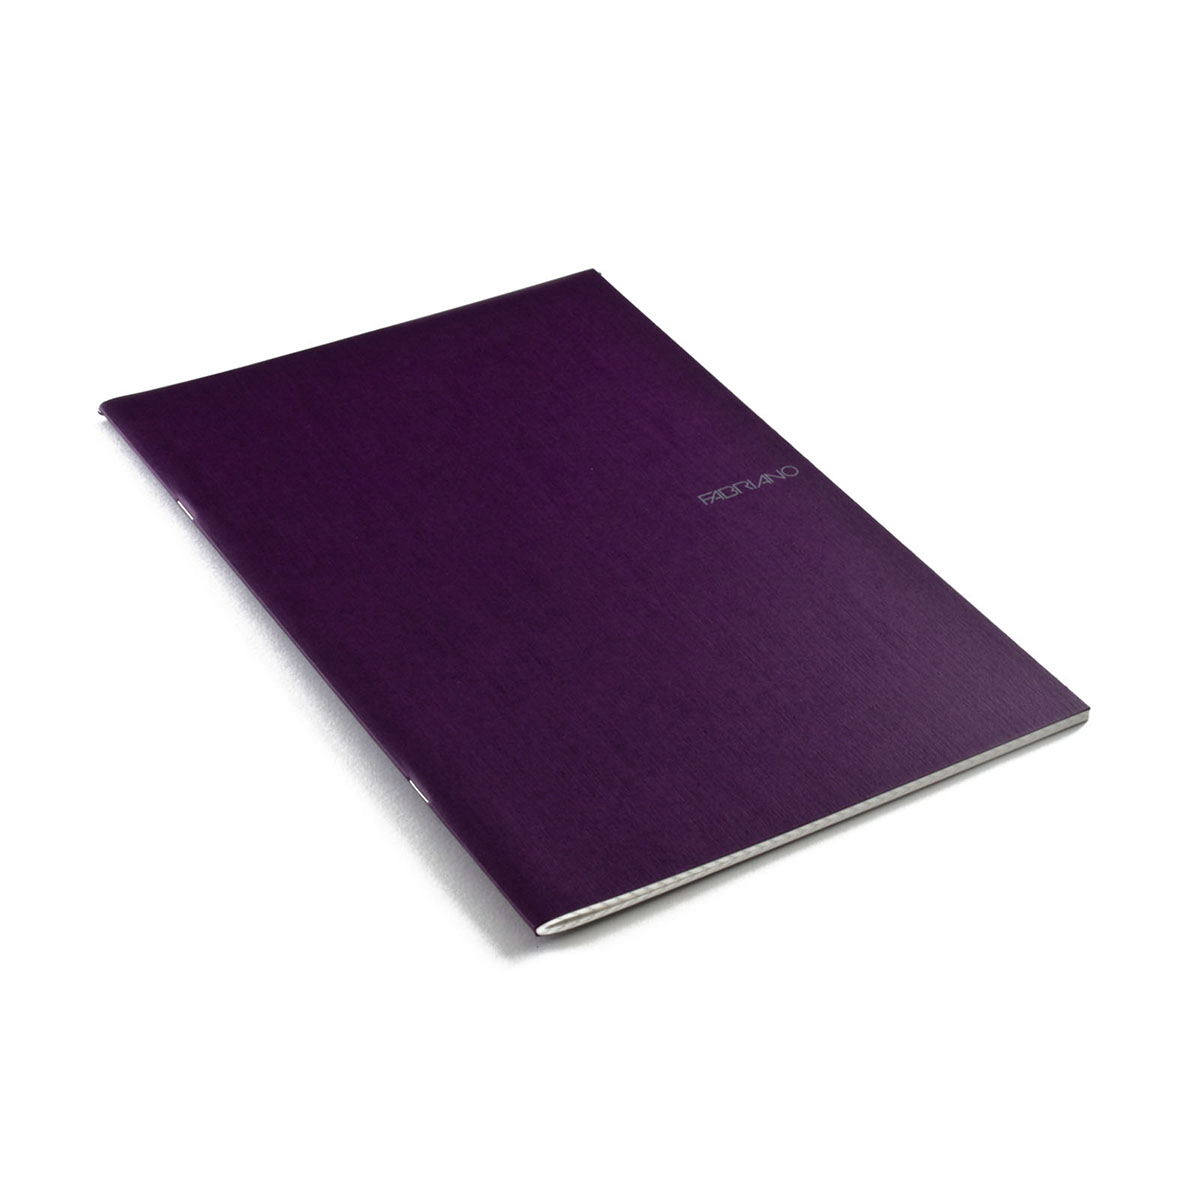 Fabriano EcoQua Staple Bound Blank Notebook A5 (5.83″x8.27″)